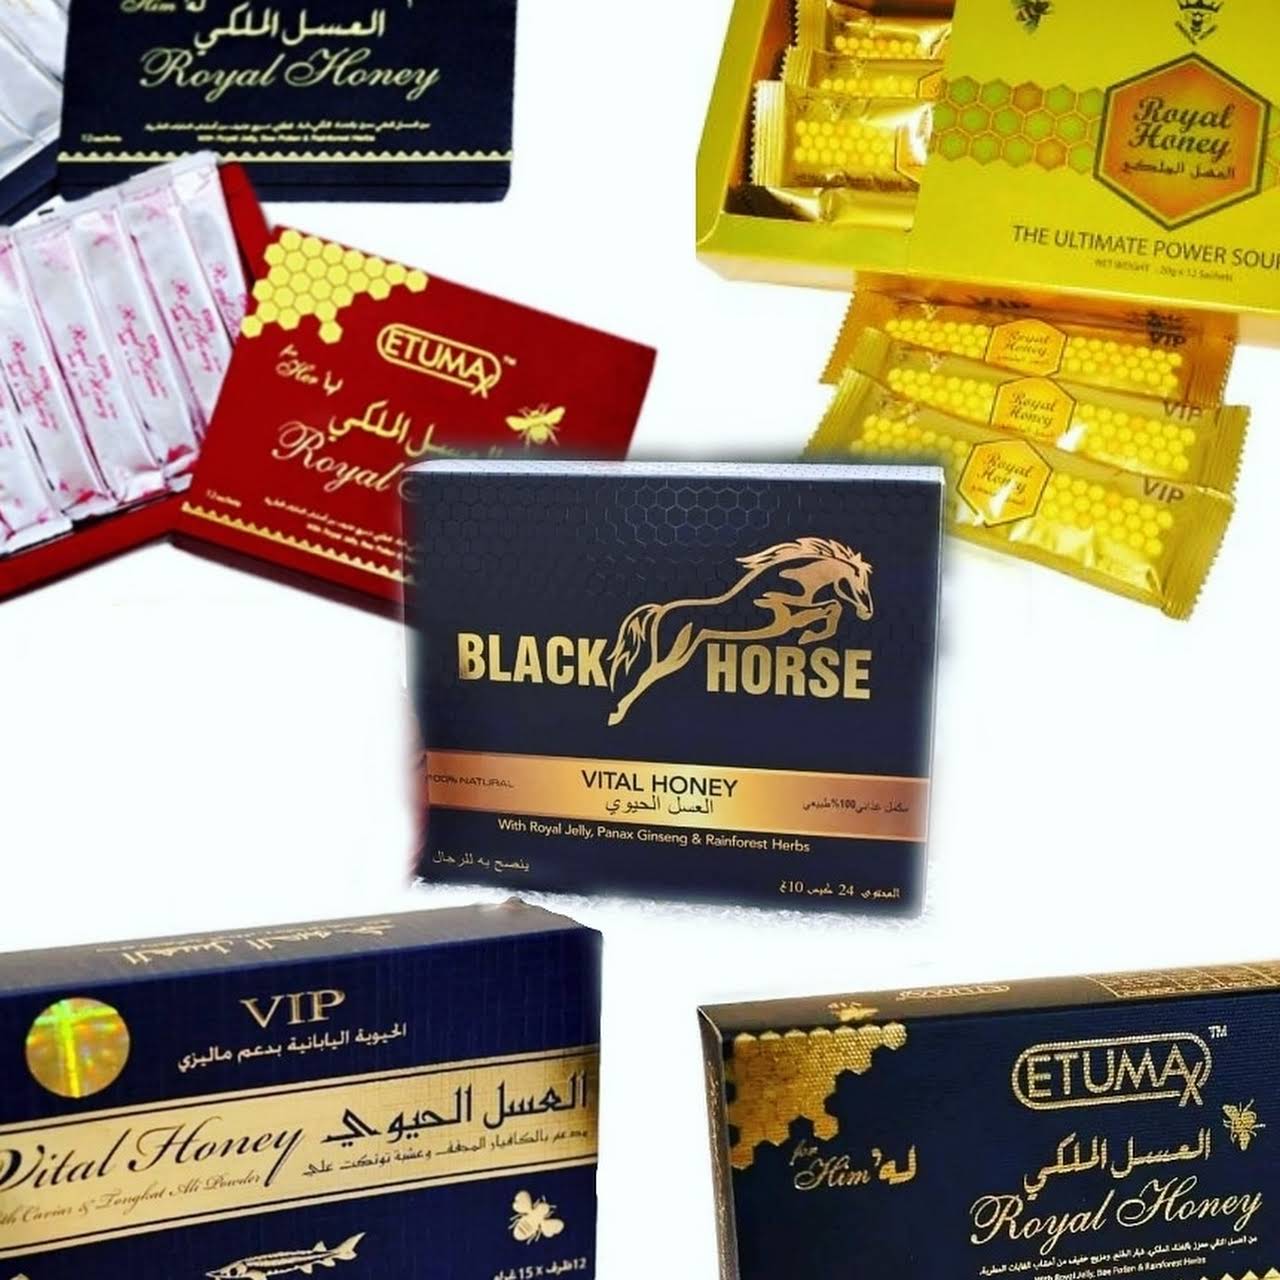 Black Horse Vital Honey, Black Horse Honey, Black Horse Vital Honey, Vital  Honey - Buy United States Wholesale Black Horse Vital Honey $6